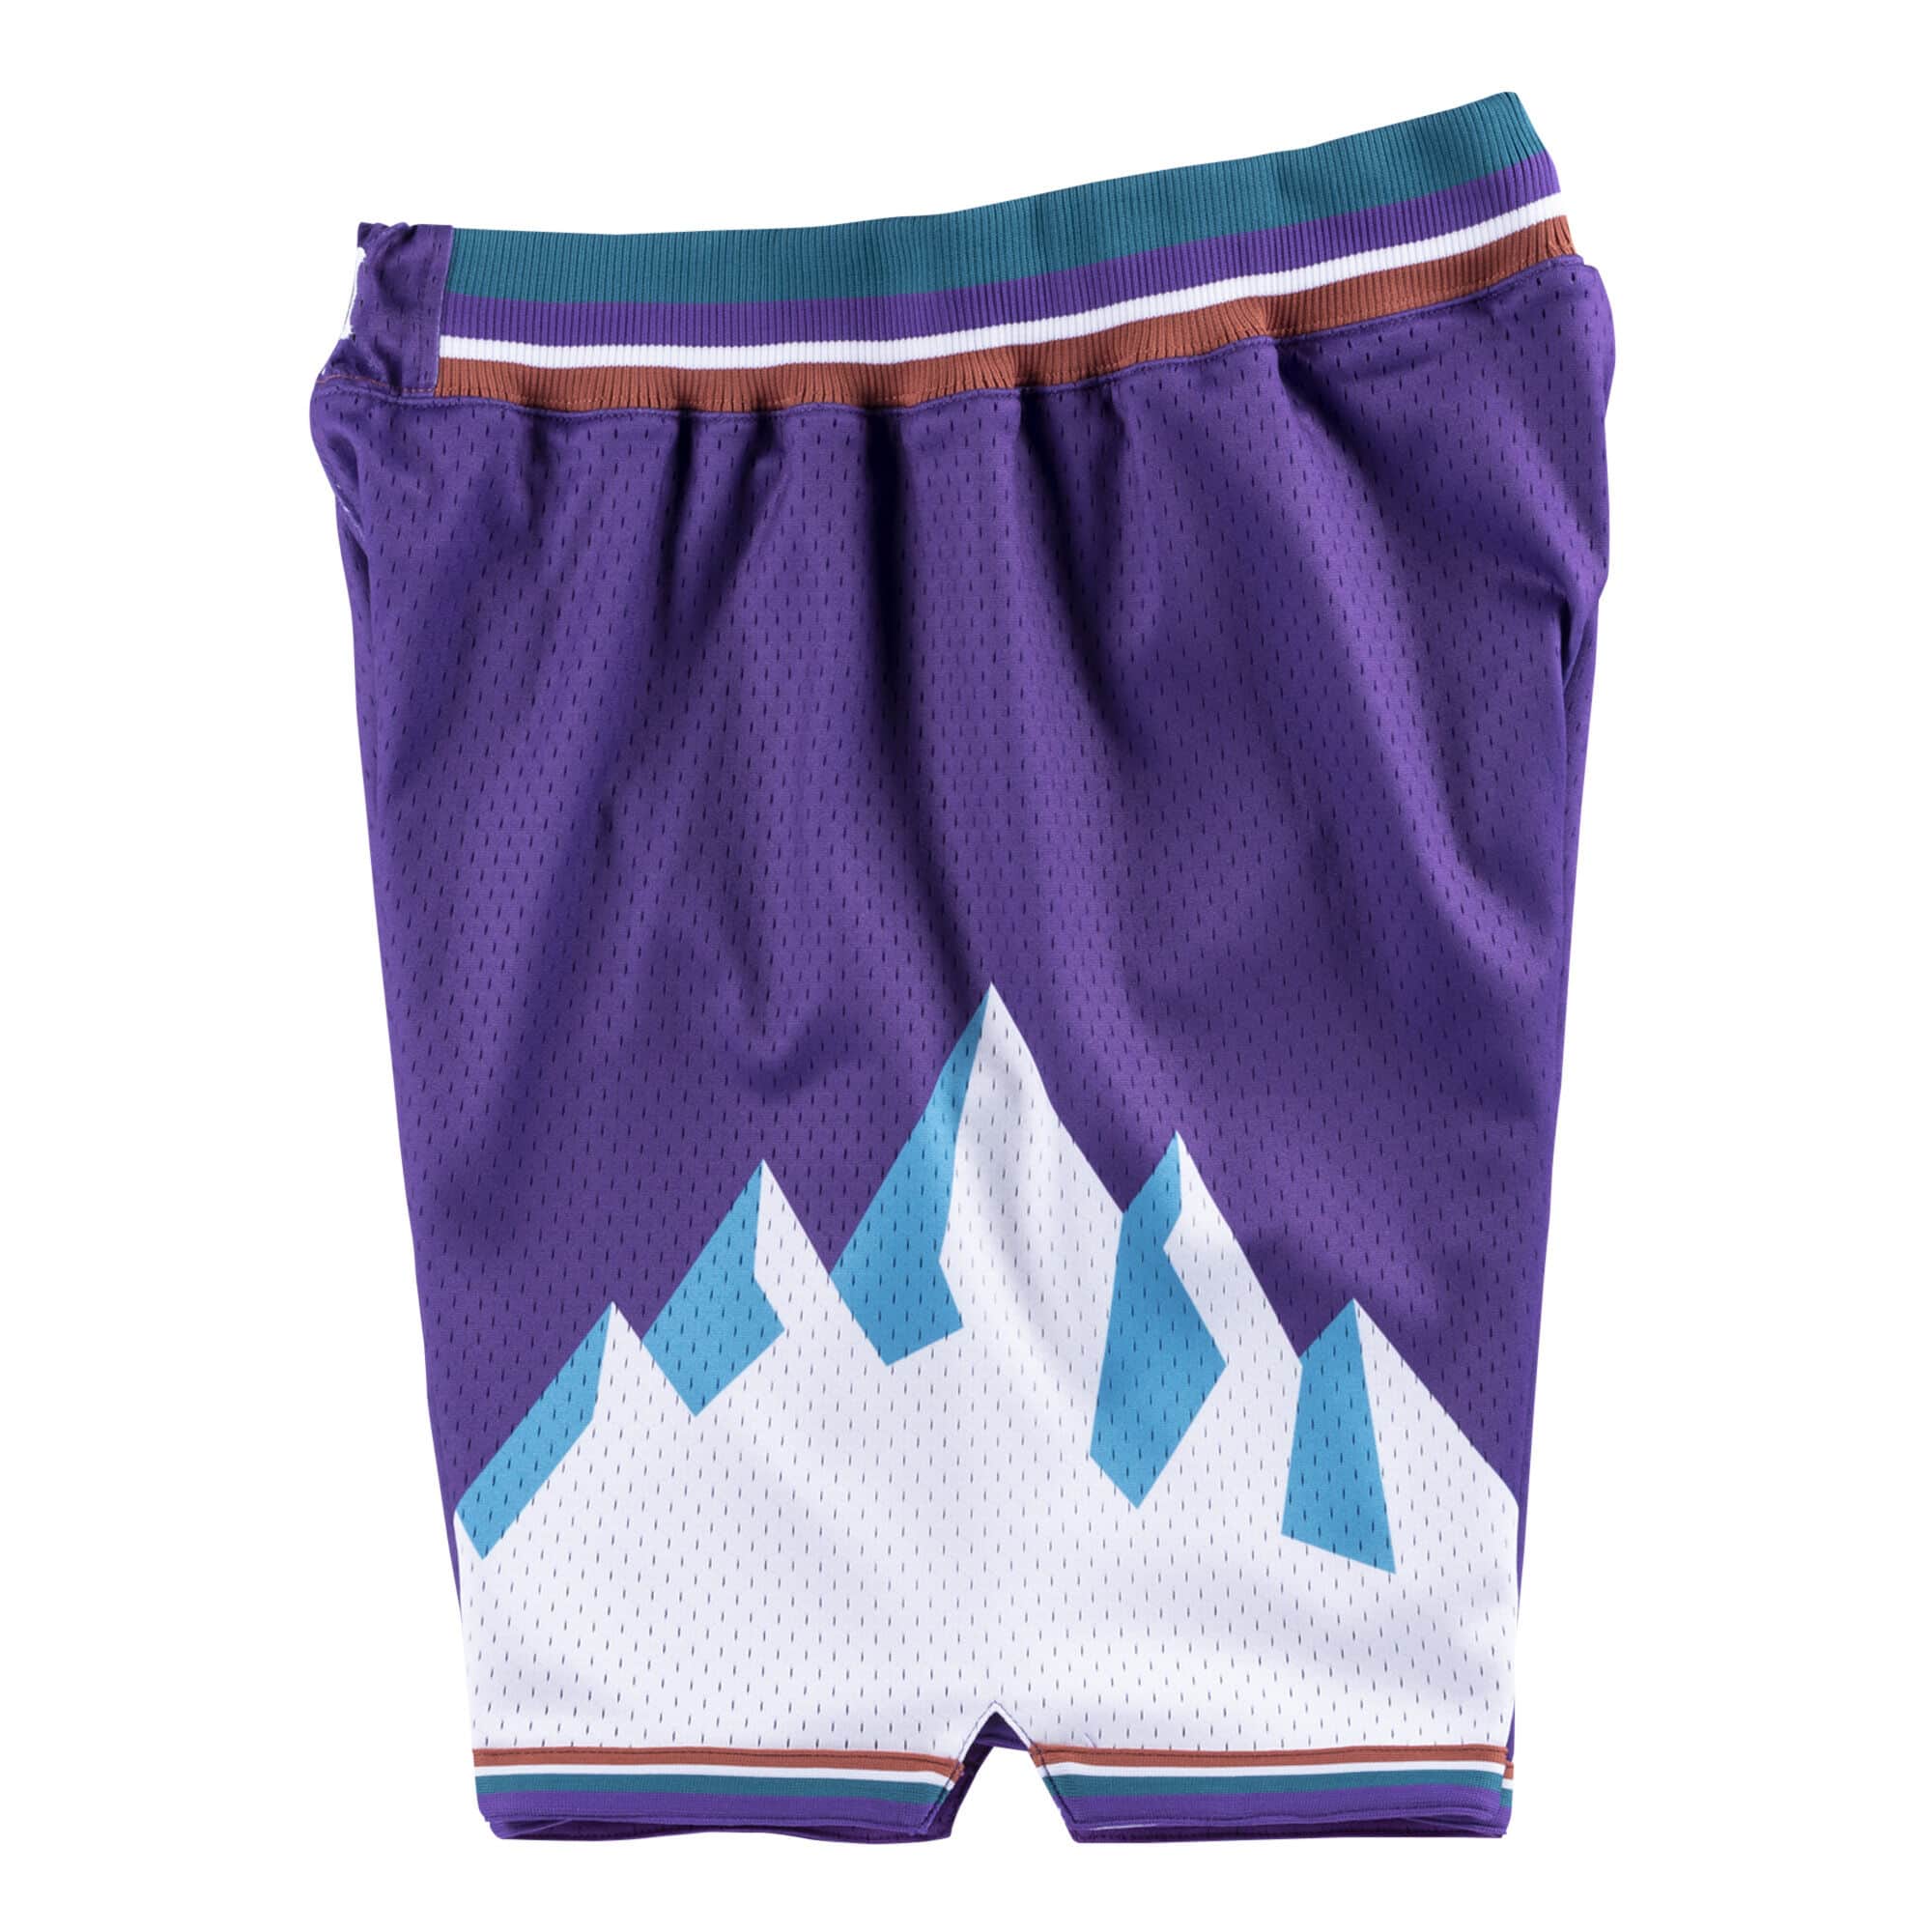 1stDibs Just Don x Mitchell & Ness NBA Utah Jazz Shorts